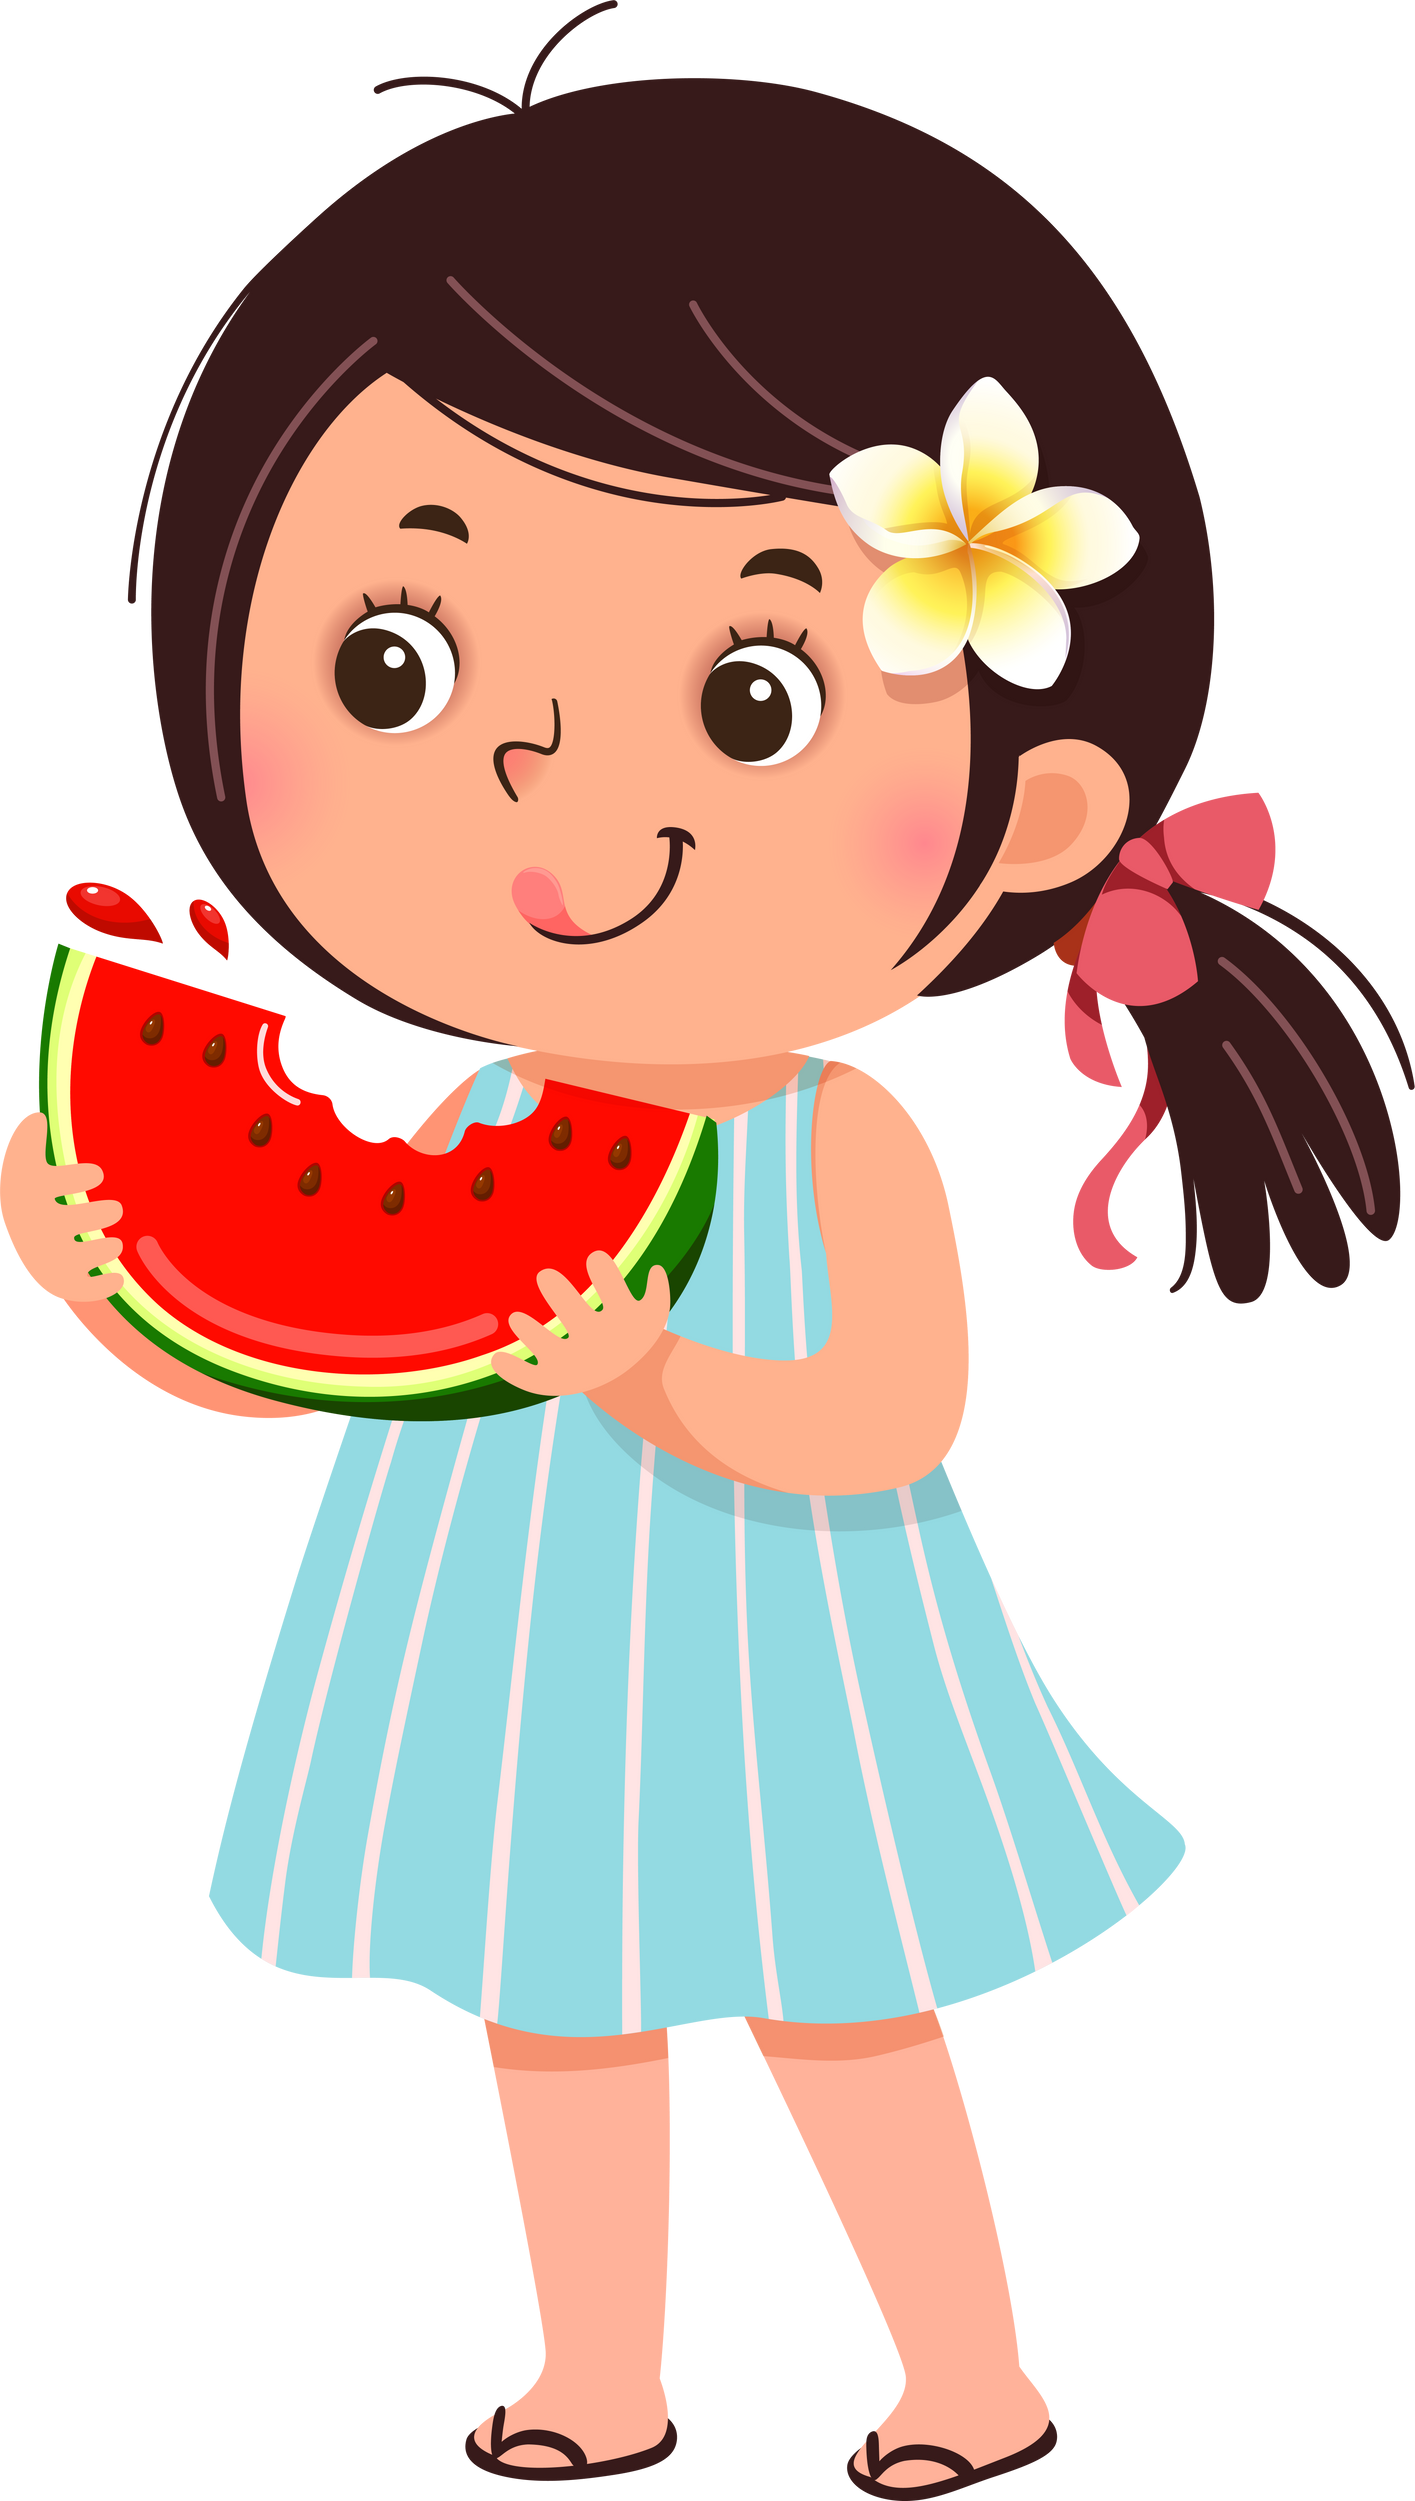 Cartoon little girl eating watermelon in hot sunny day